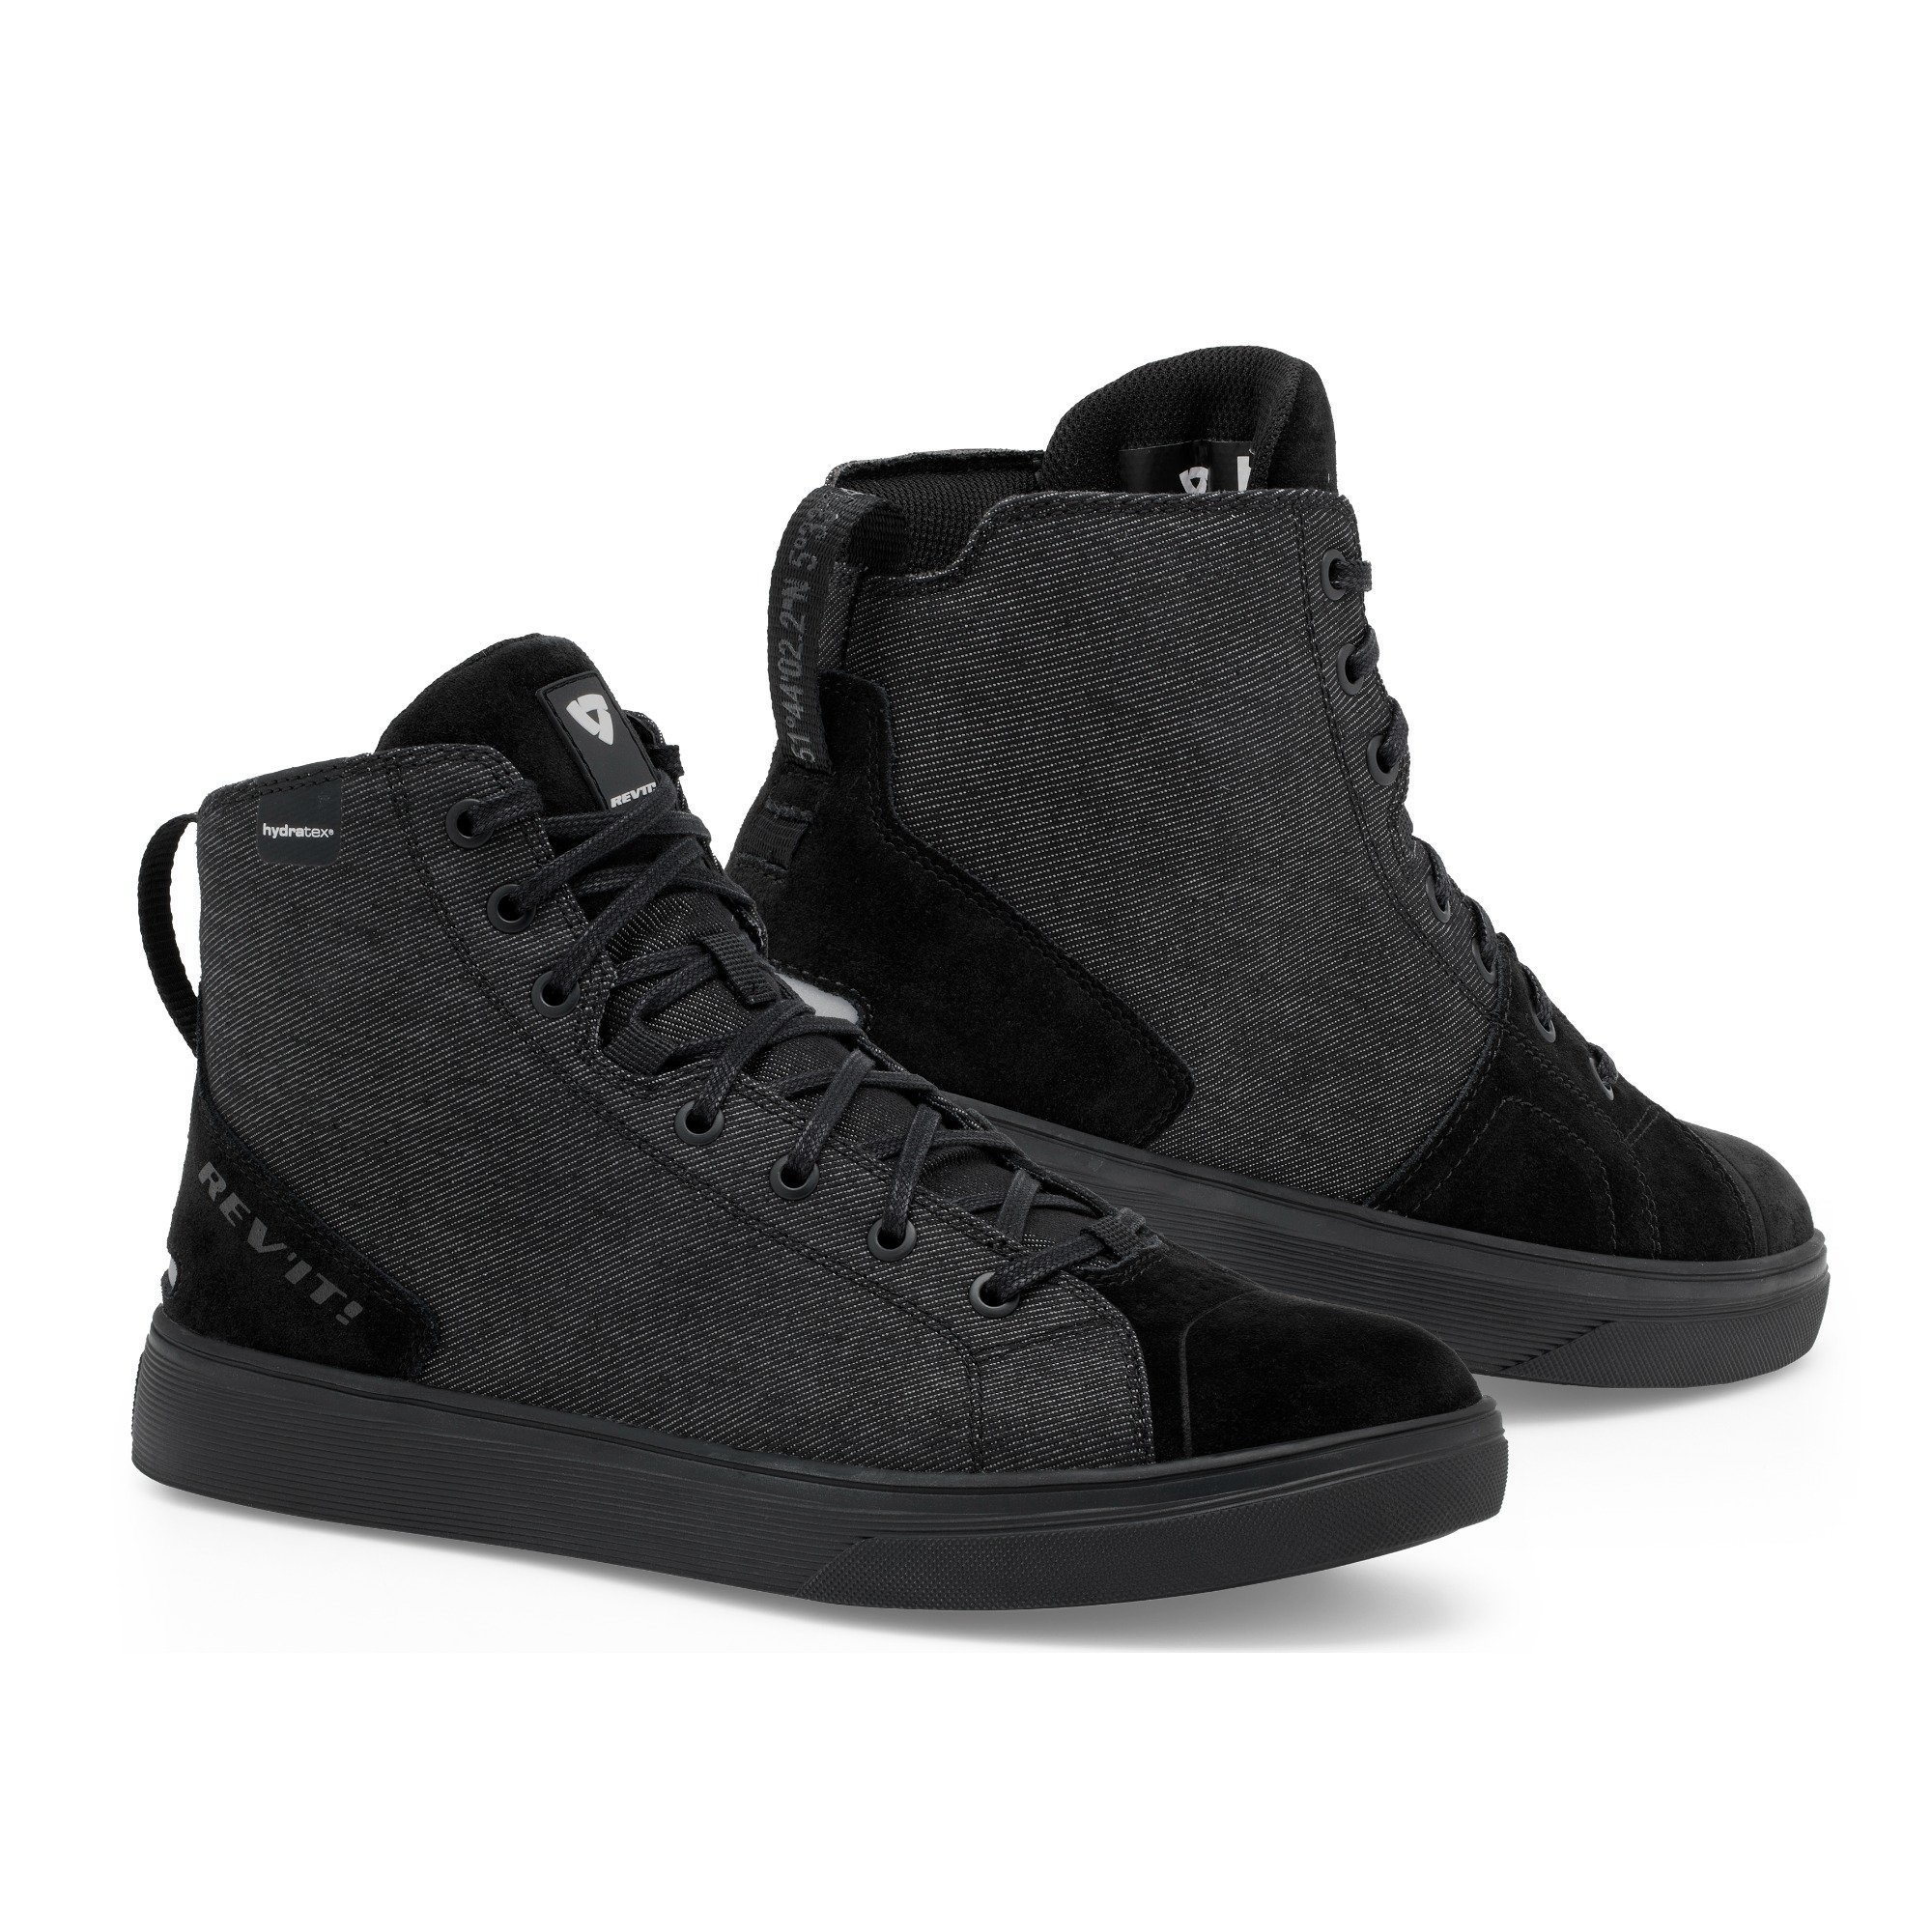 Image of REV'IT! Delta H2O Shoes Black Size 45 EN